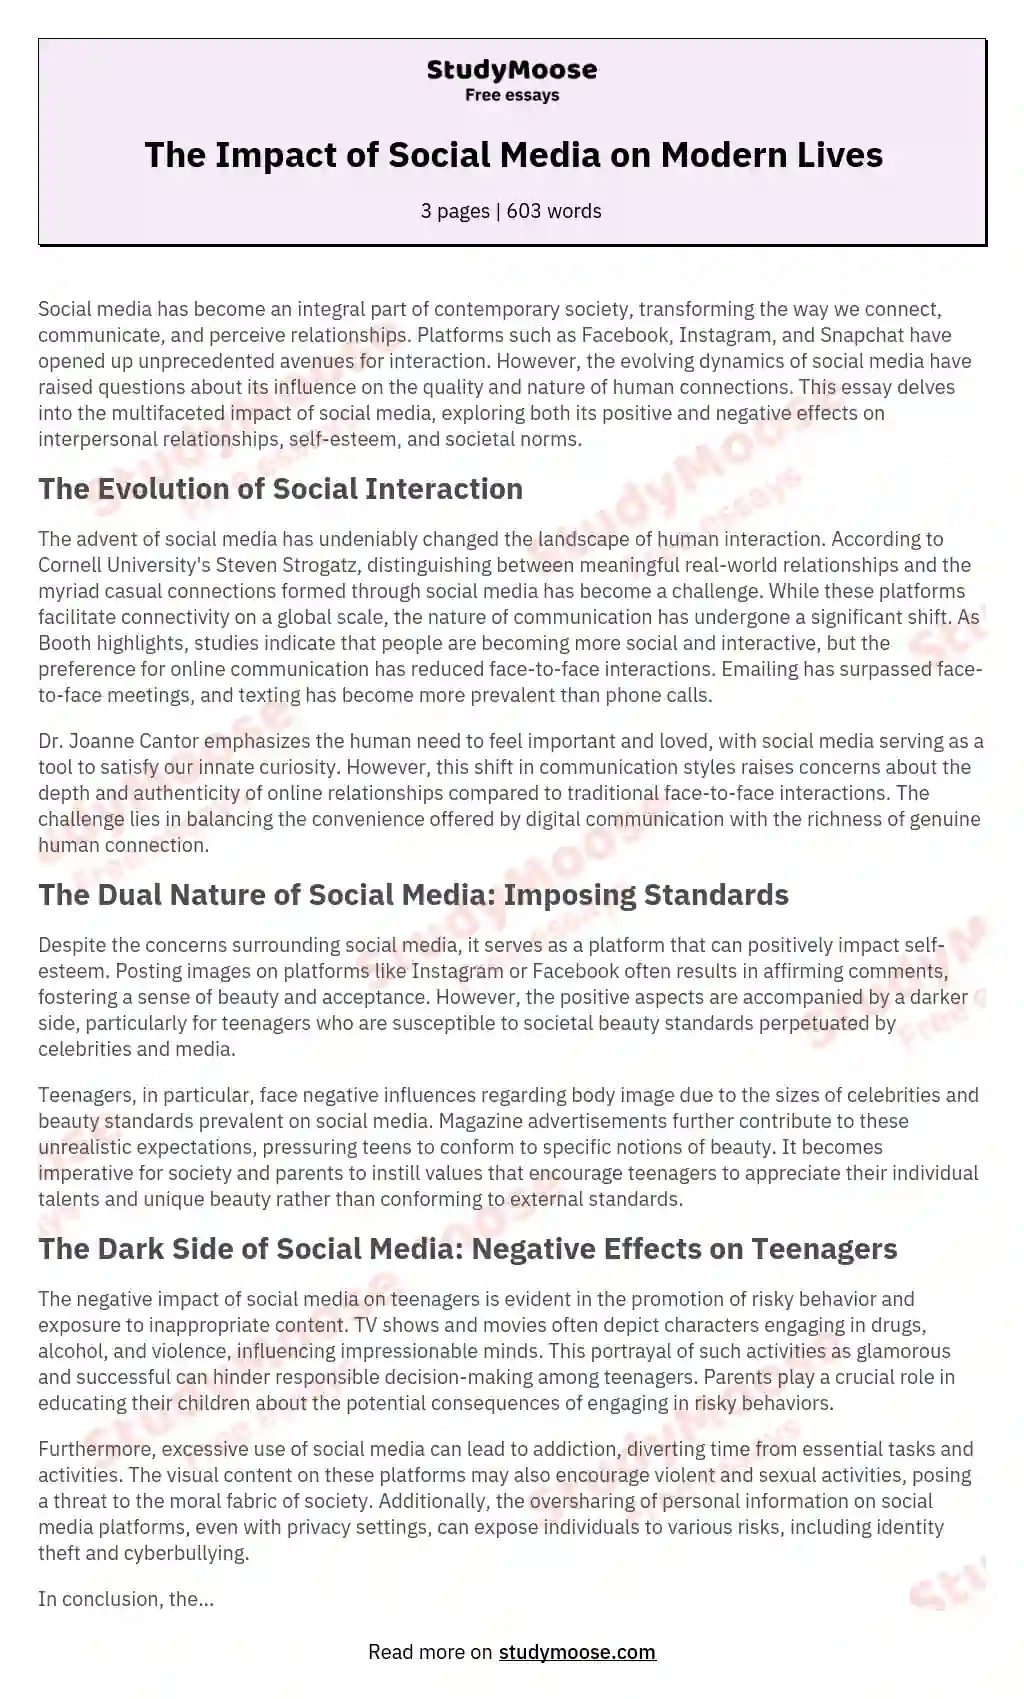 The Impact of Social Media on Modern Lives essay